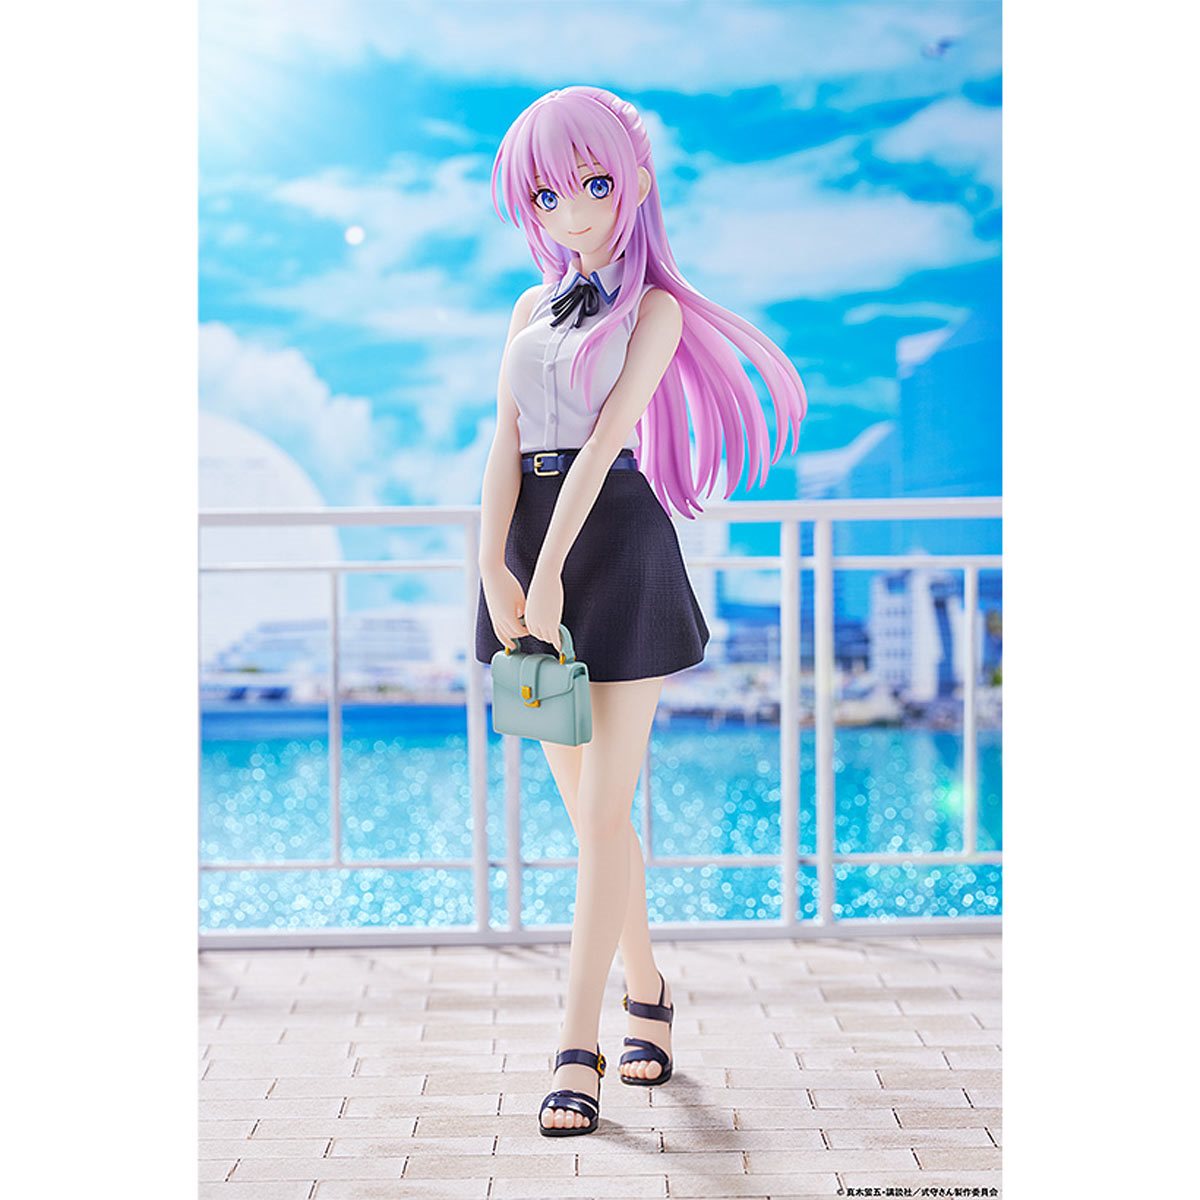 Shikimori's Not Just a Cutie - Shikimori 1/7th Scale Figure Miyuki (Summer Outfit Version)